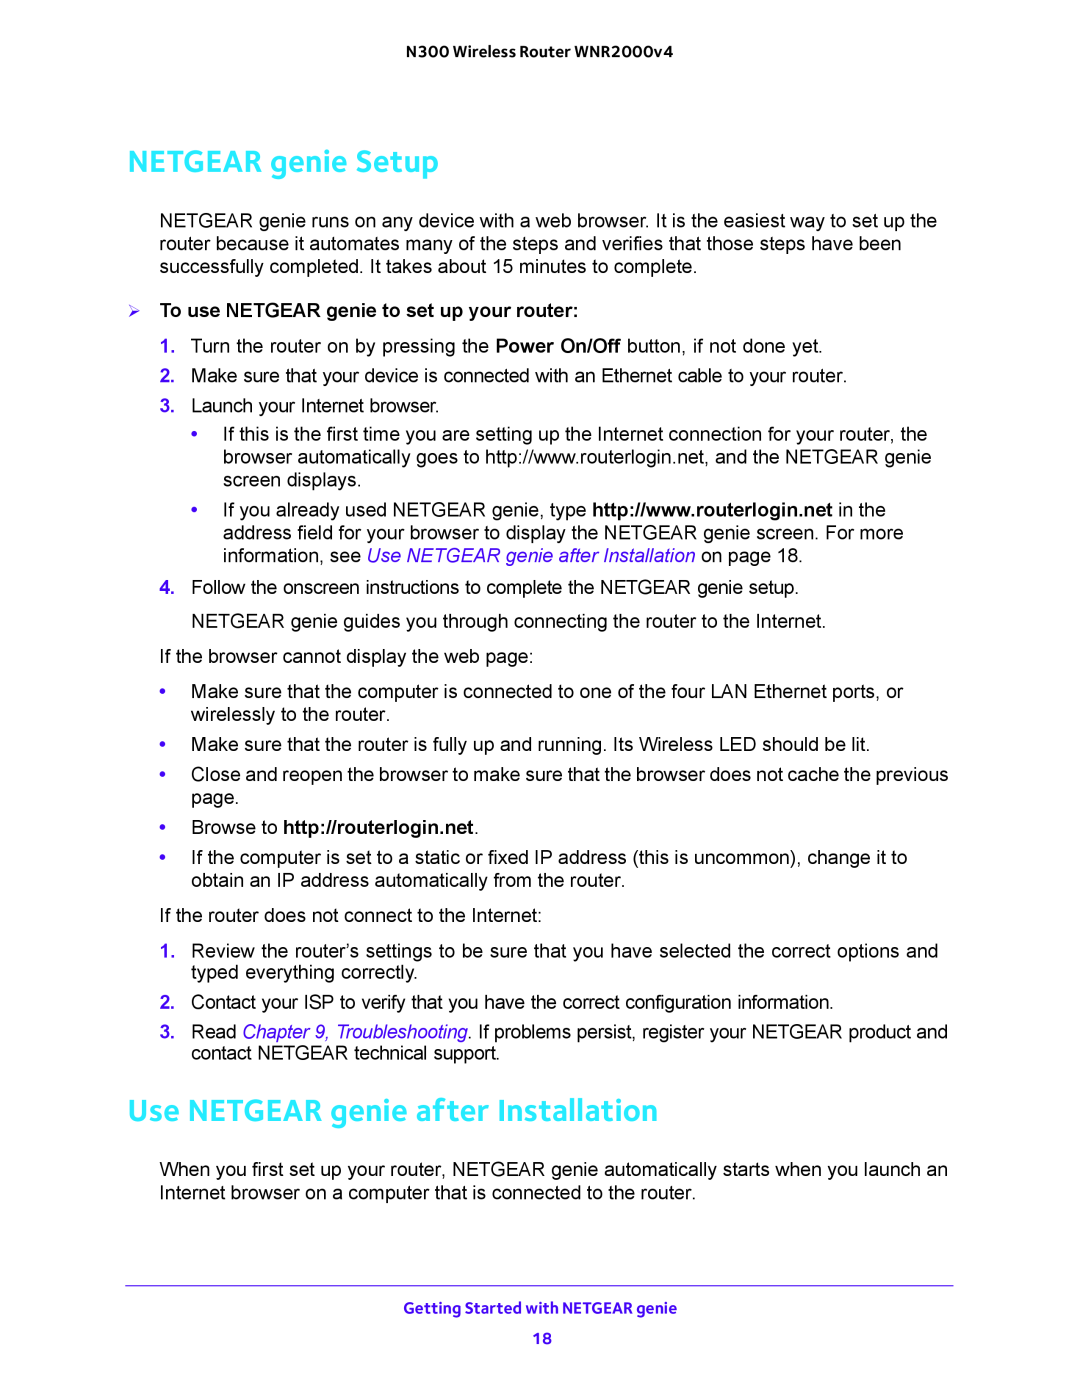 NETGEAR WNR200v4 NETGEAR genie Setup, Use NETGEAR genie after Installation,  To use NETGEAR genie to set up your router 